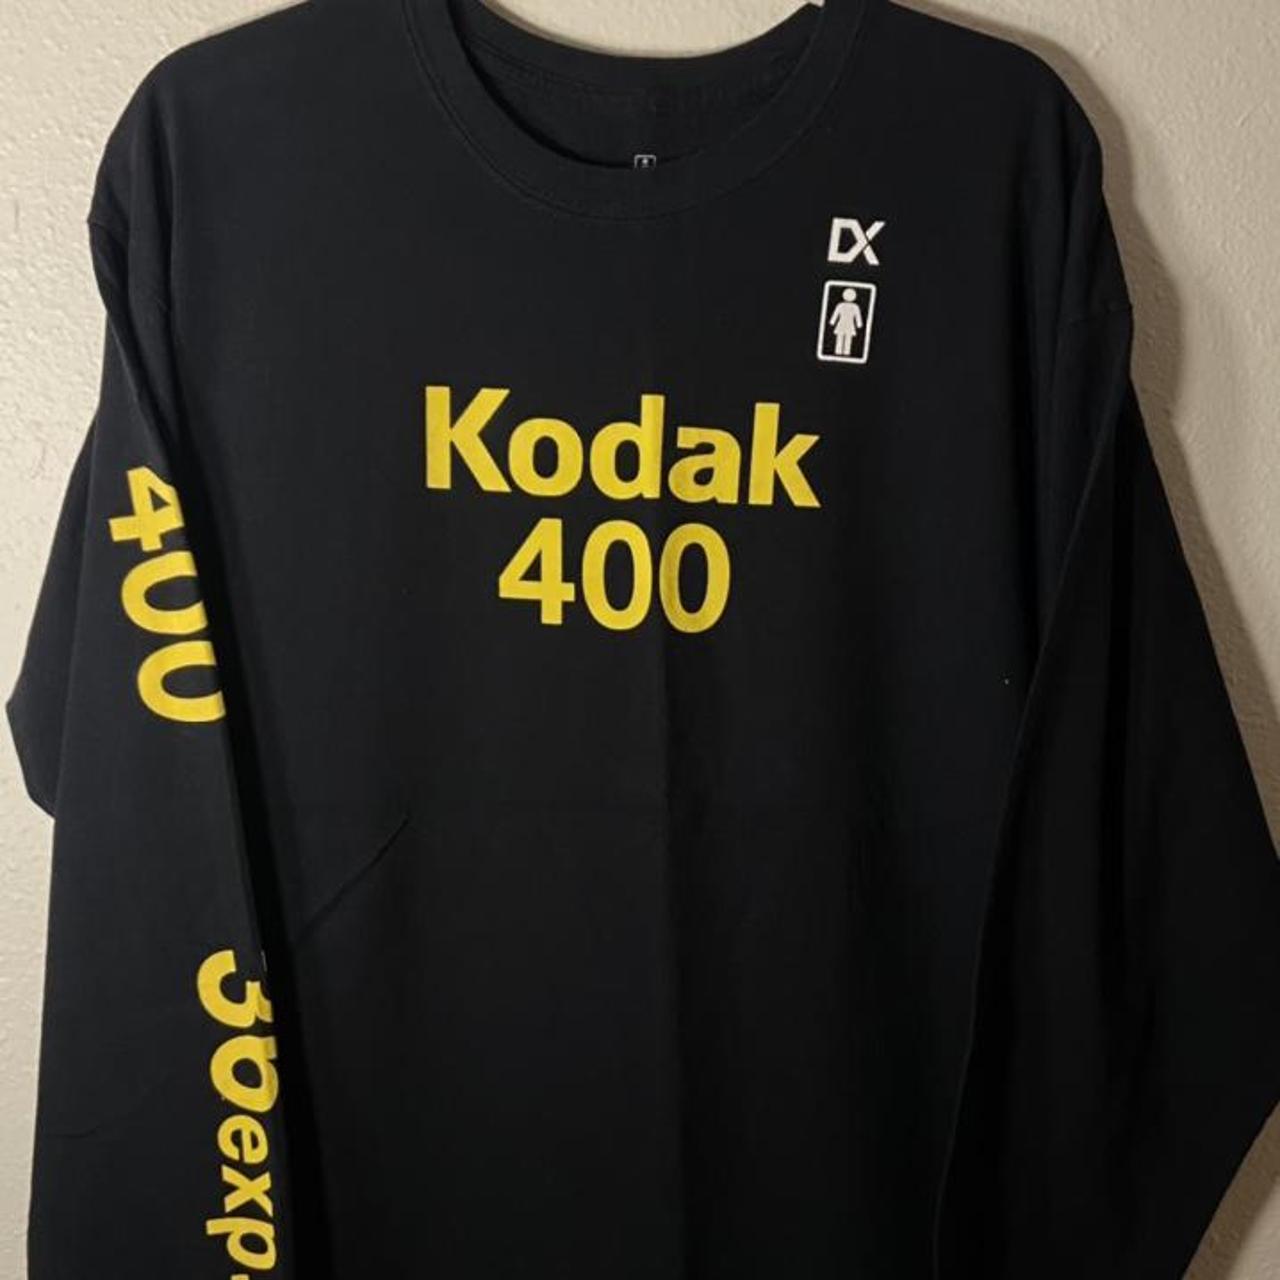 Kodak Men's Black and Yellow T-shirt